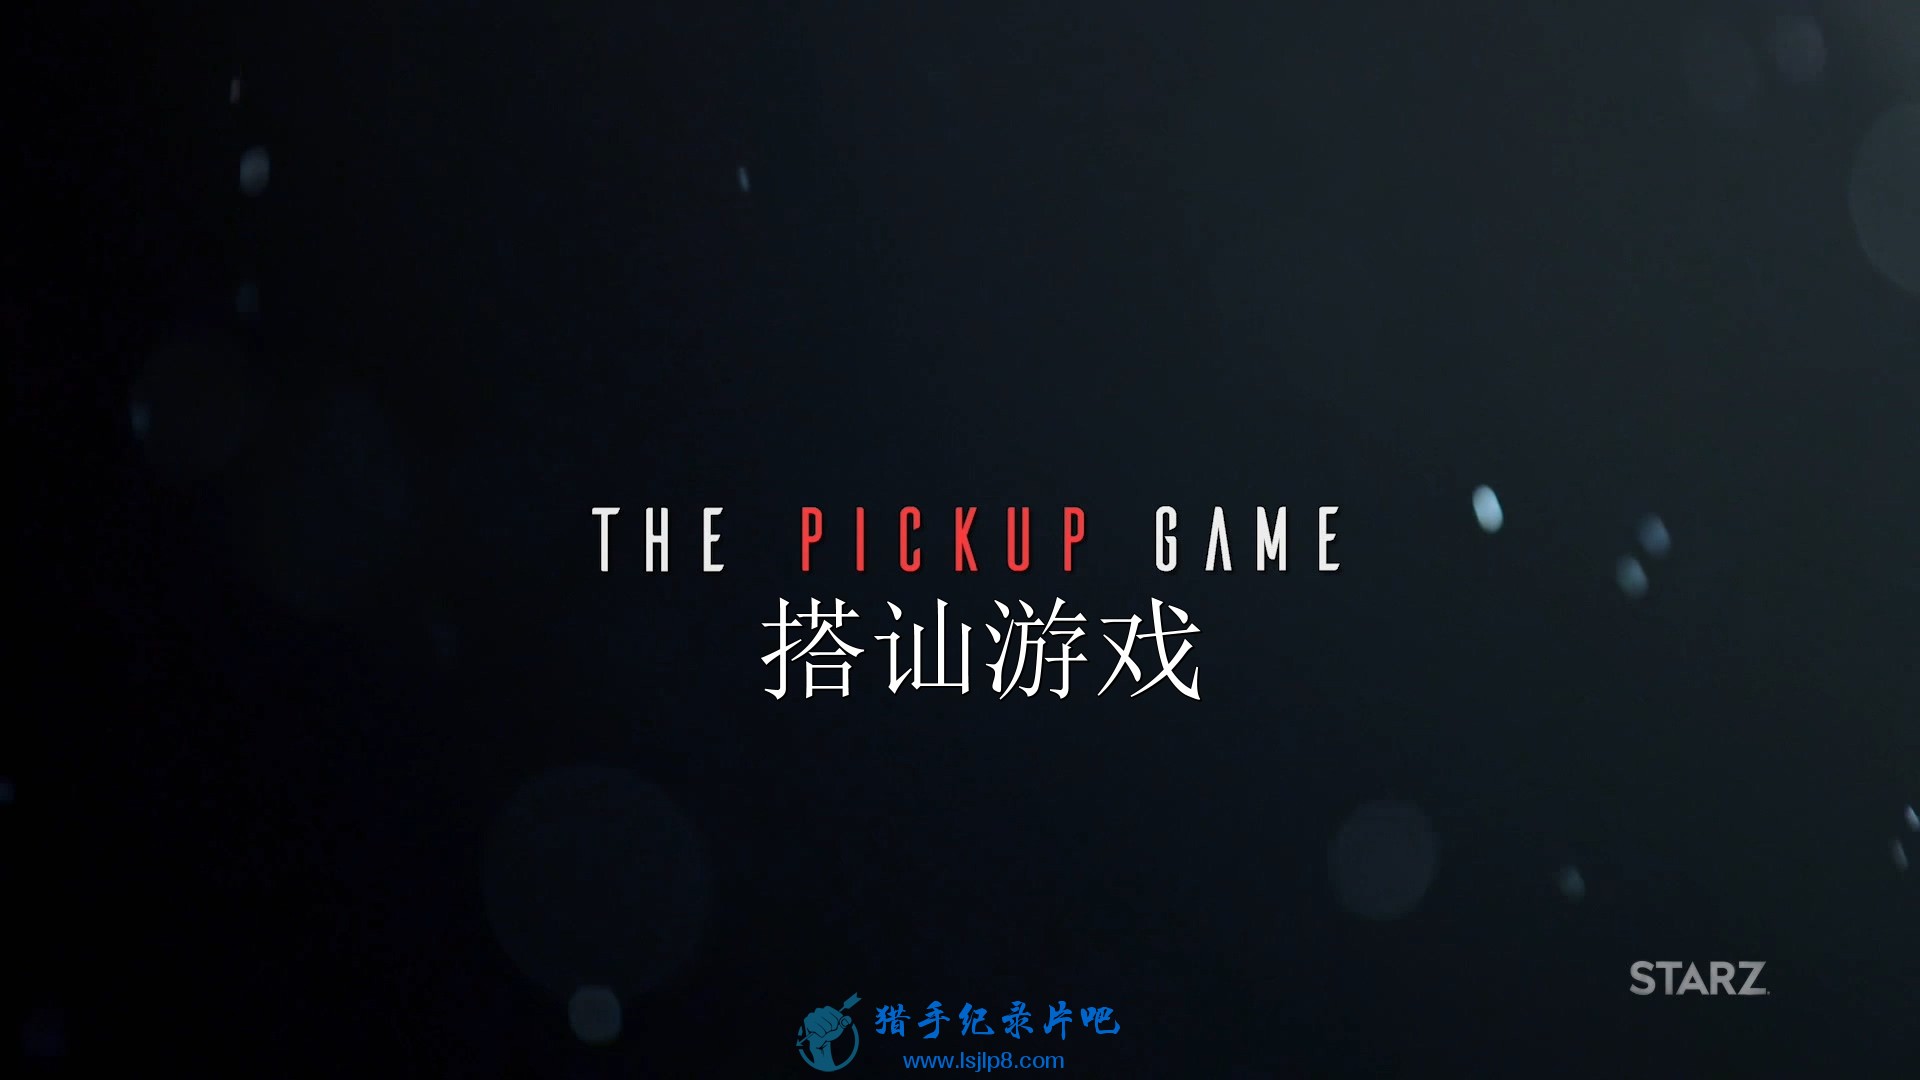 The.Pickup.Game.2019.1080p.AMZN.WEB-DL.DDP5.1.H.264-TEPES.mkv_20211015_162900.646.jpg